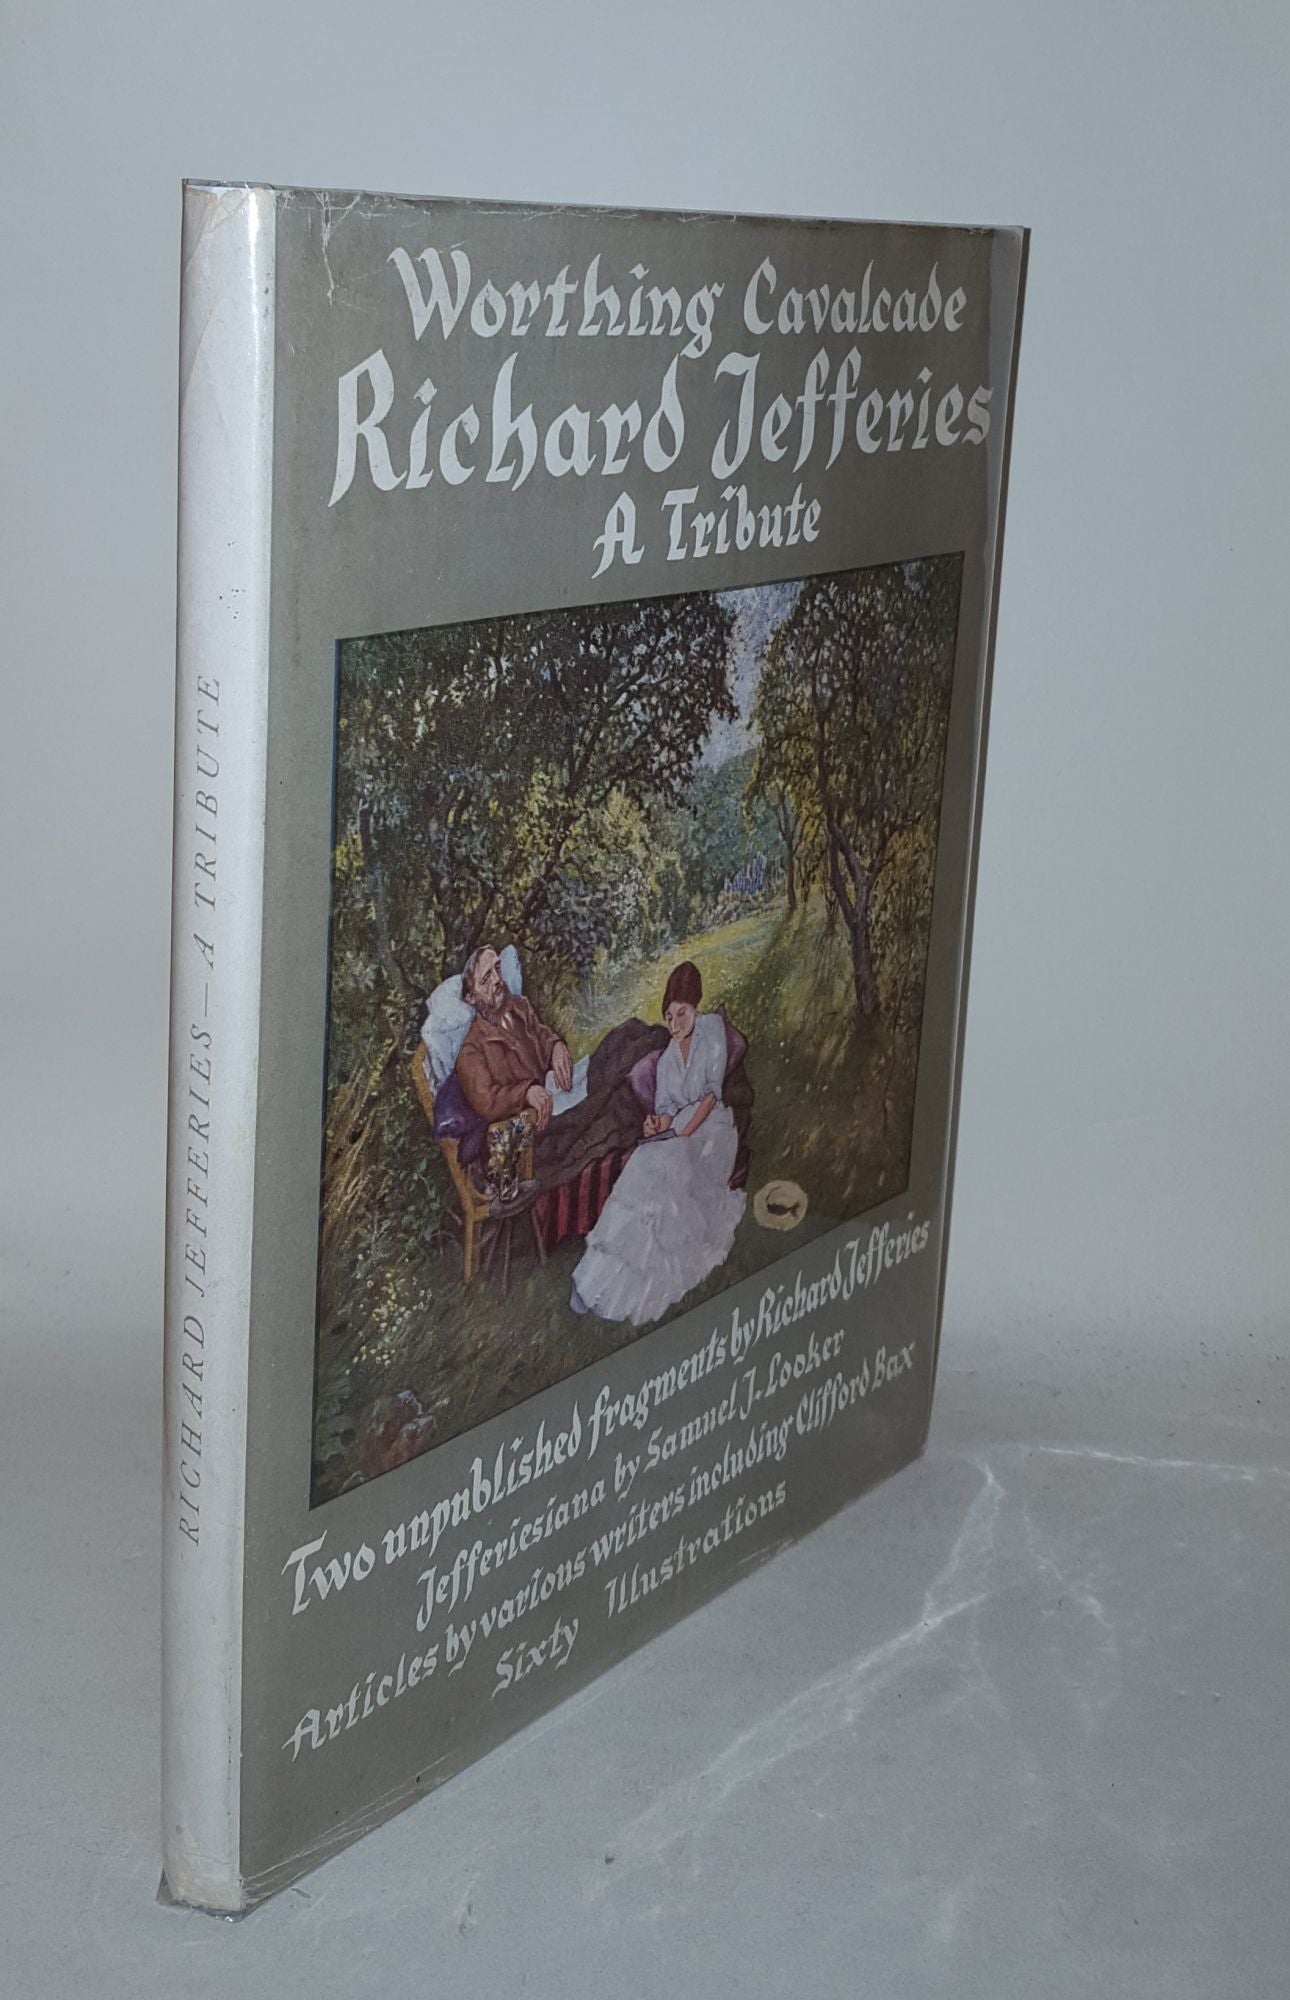 LOOKER Samuel J. - Richard Jefferies a Tribute by Various Writers Worthing Cavalcade